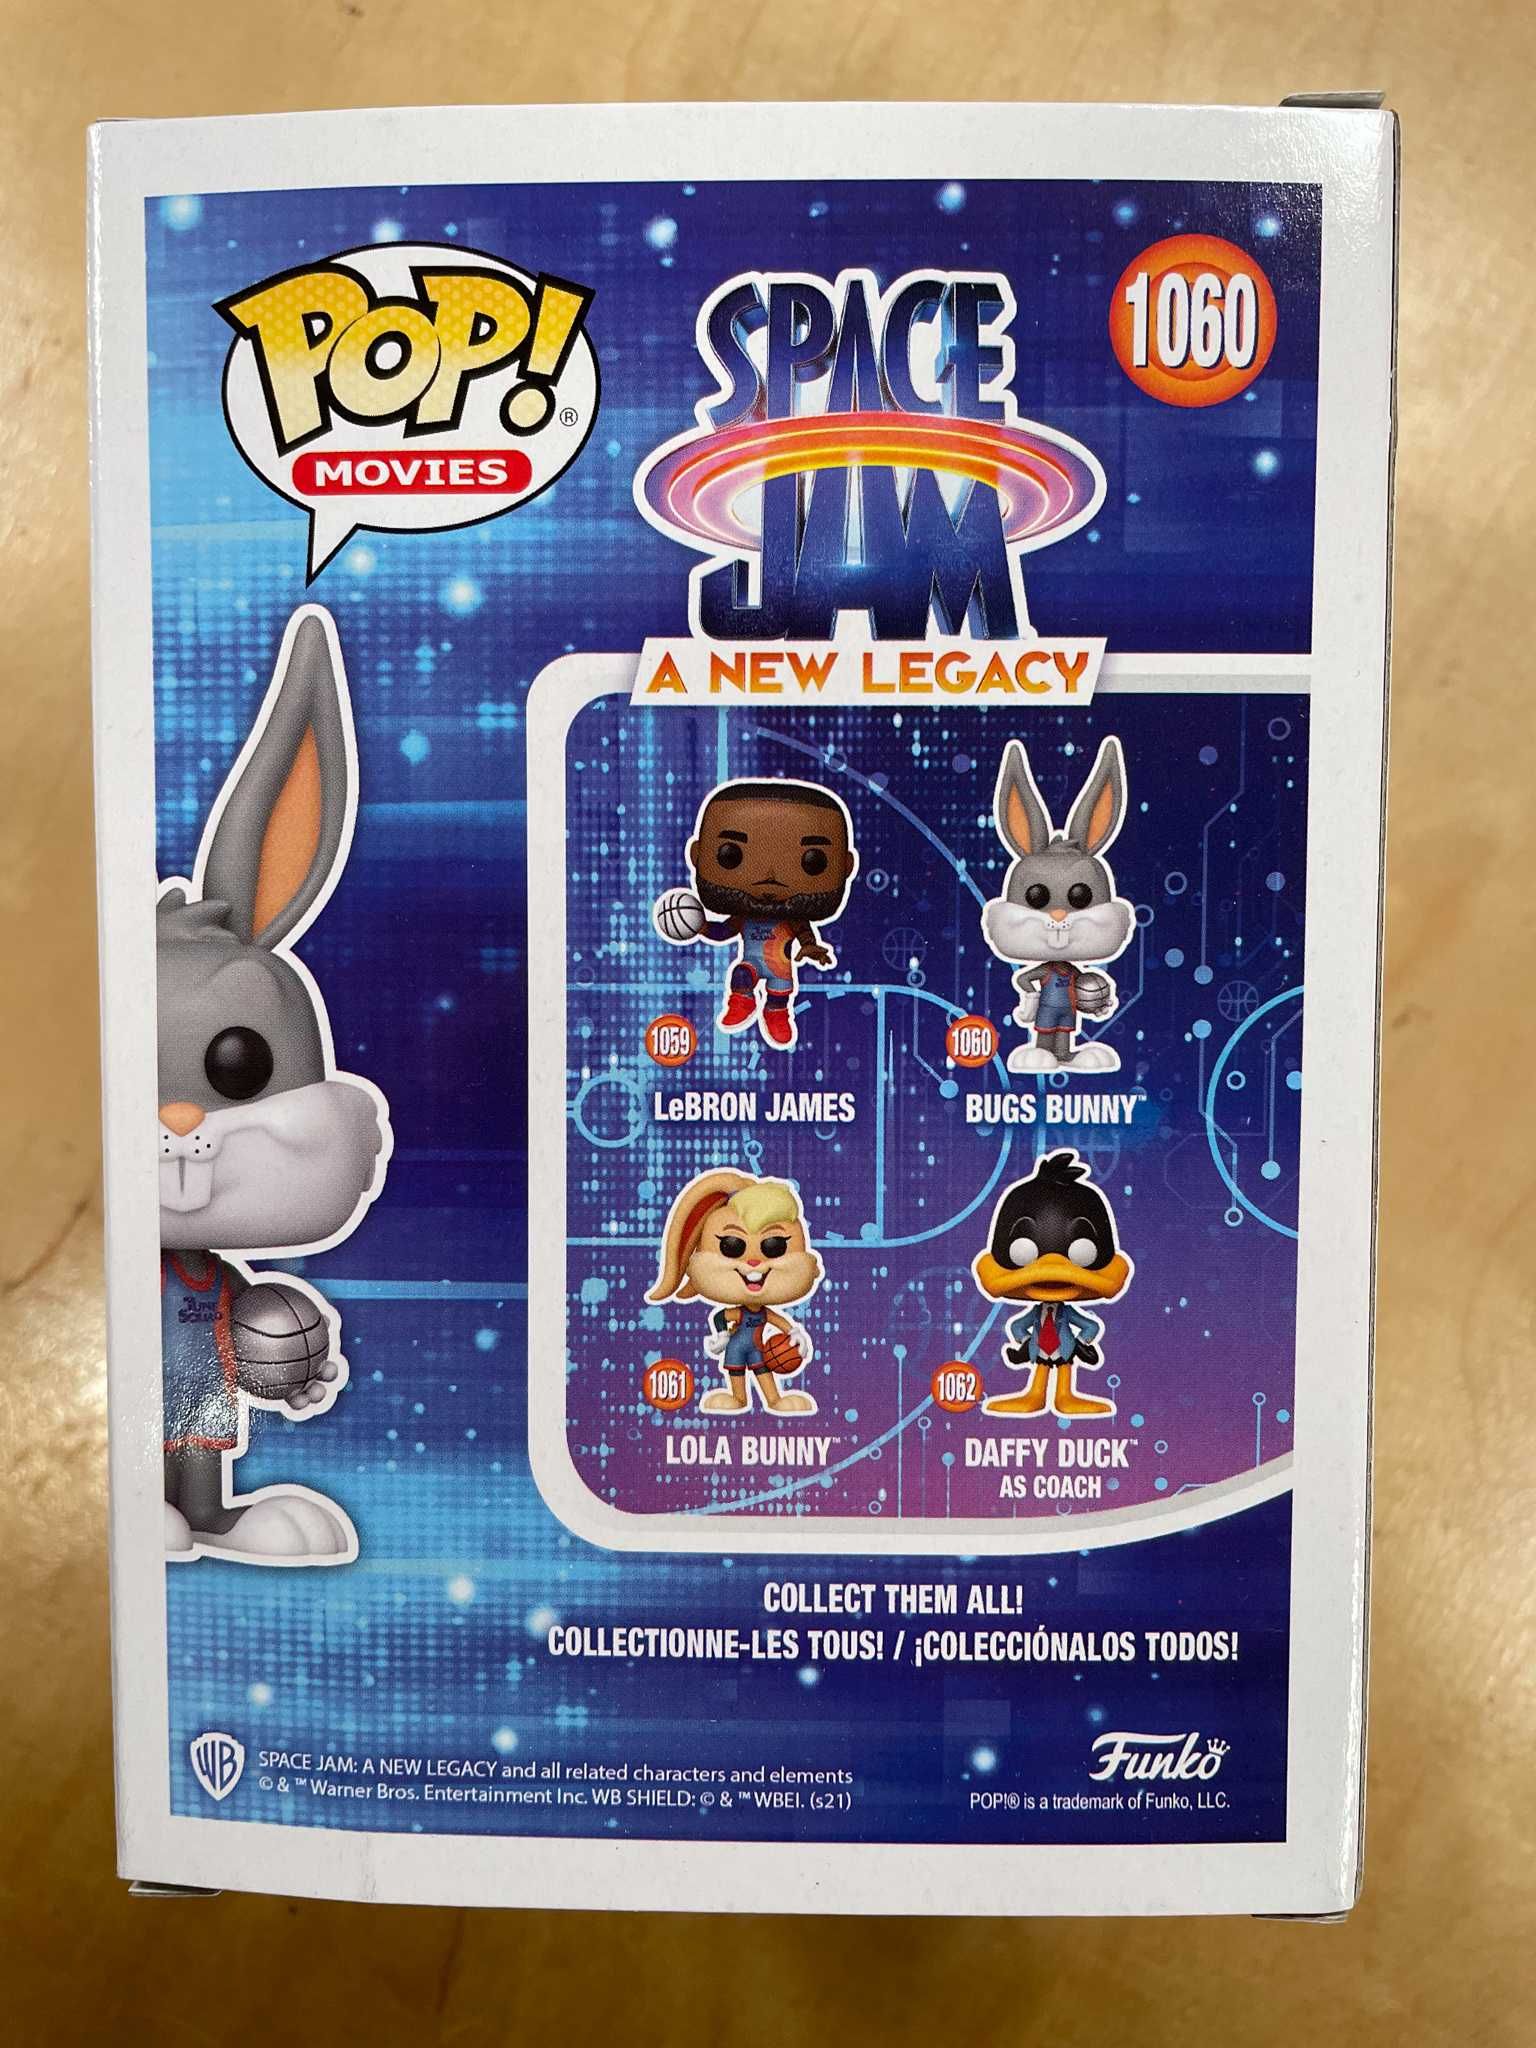 Funko pop Bugs Bunny 1060 Space Jam